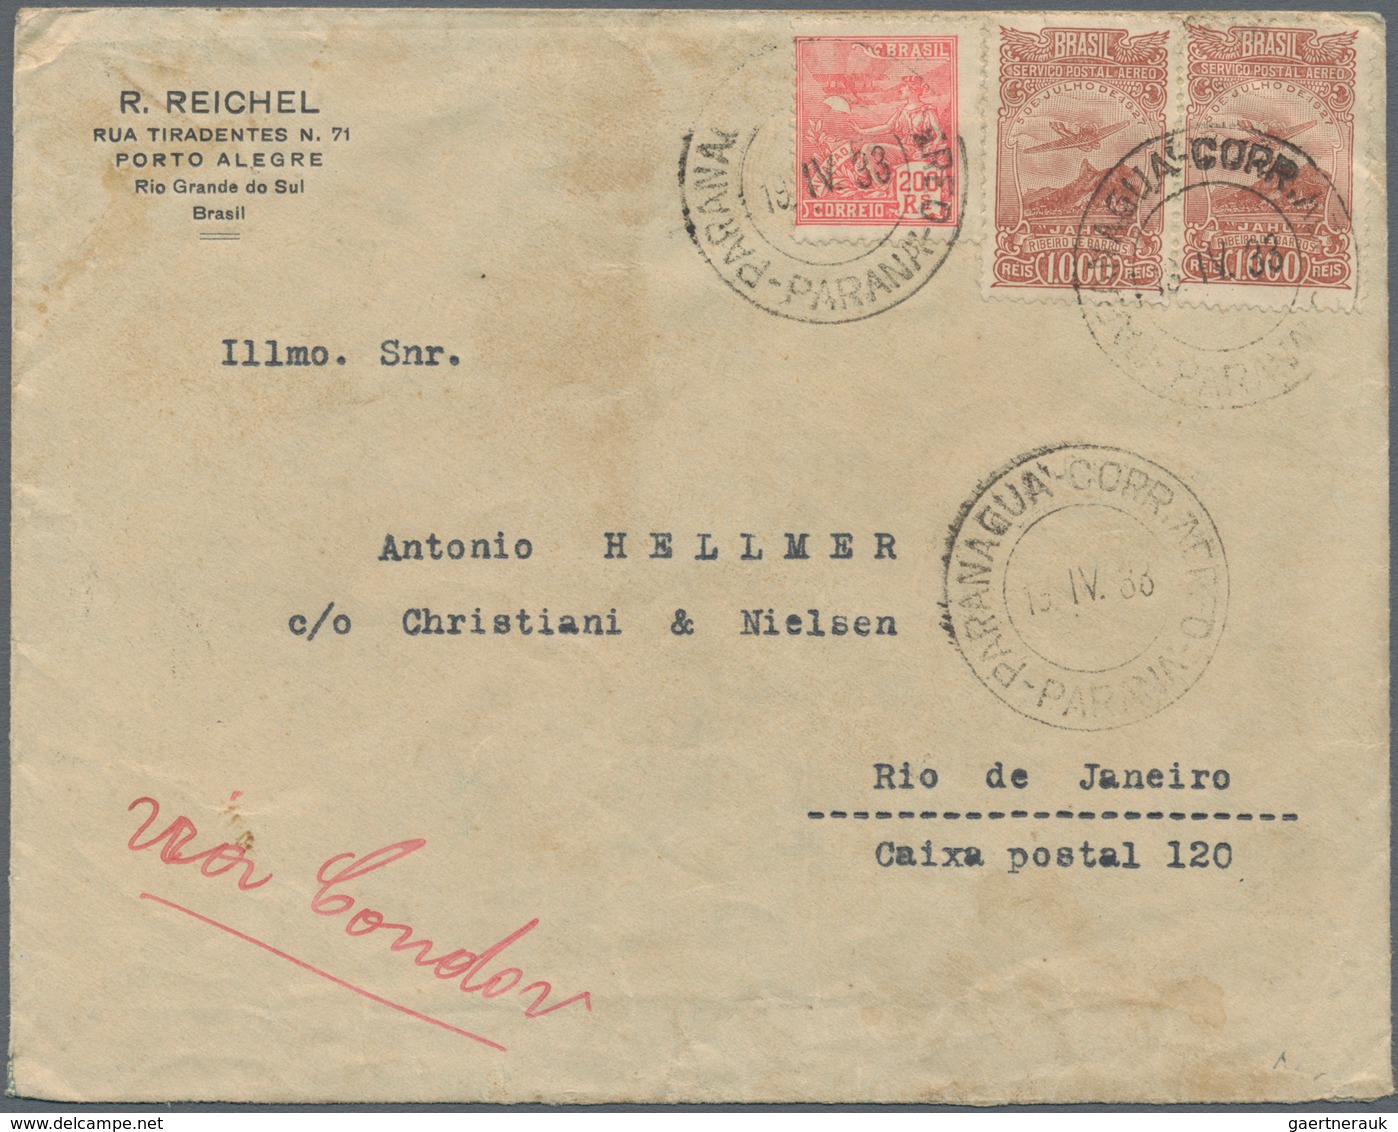 Mittel- und Südamerika: 1890/1950 (ca.), BRASIL, BRIT. GUIANA, BRIT. HONDURAS, CHILE: lot of apprx.